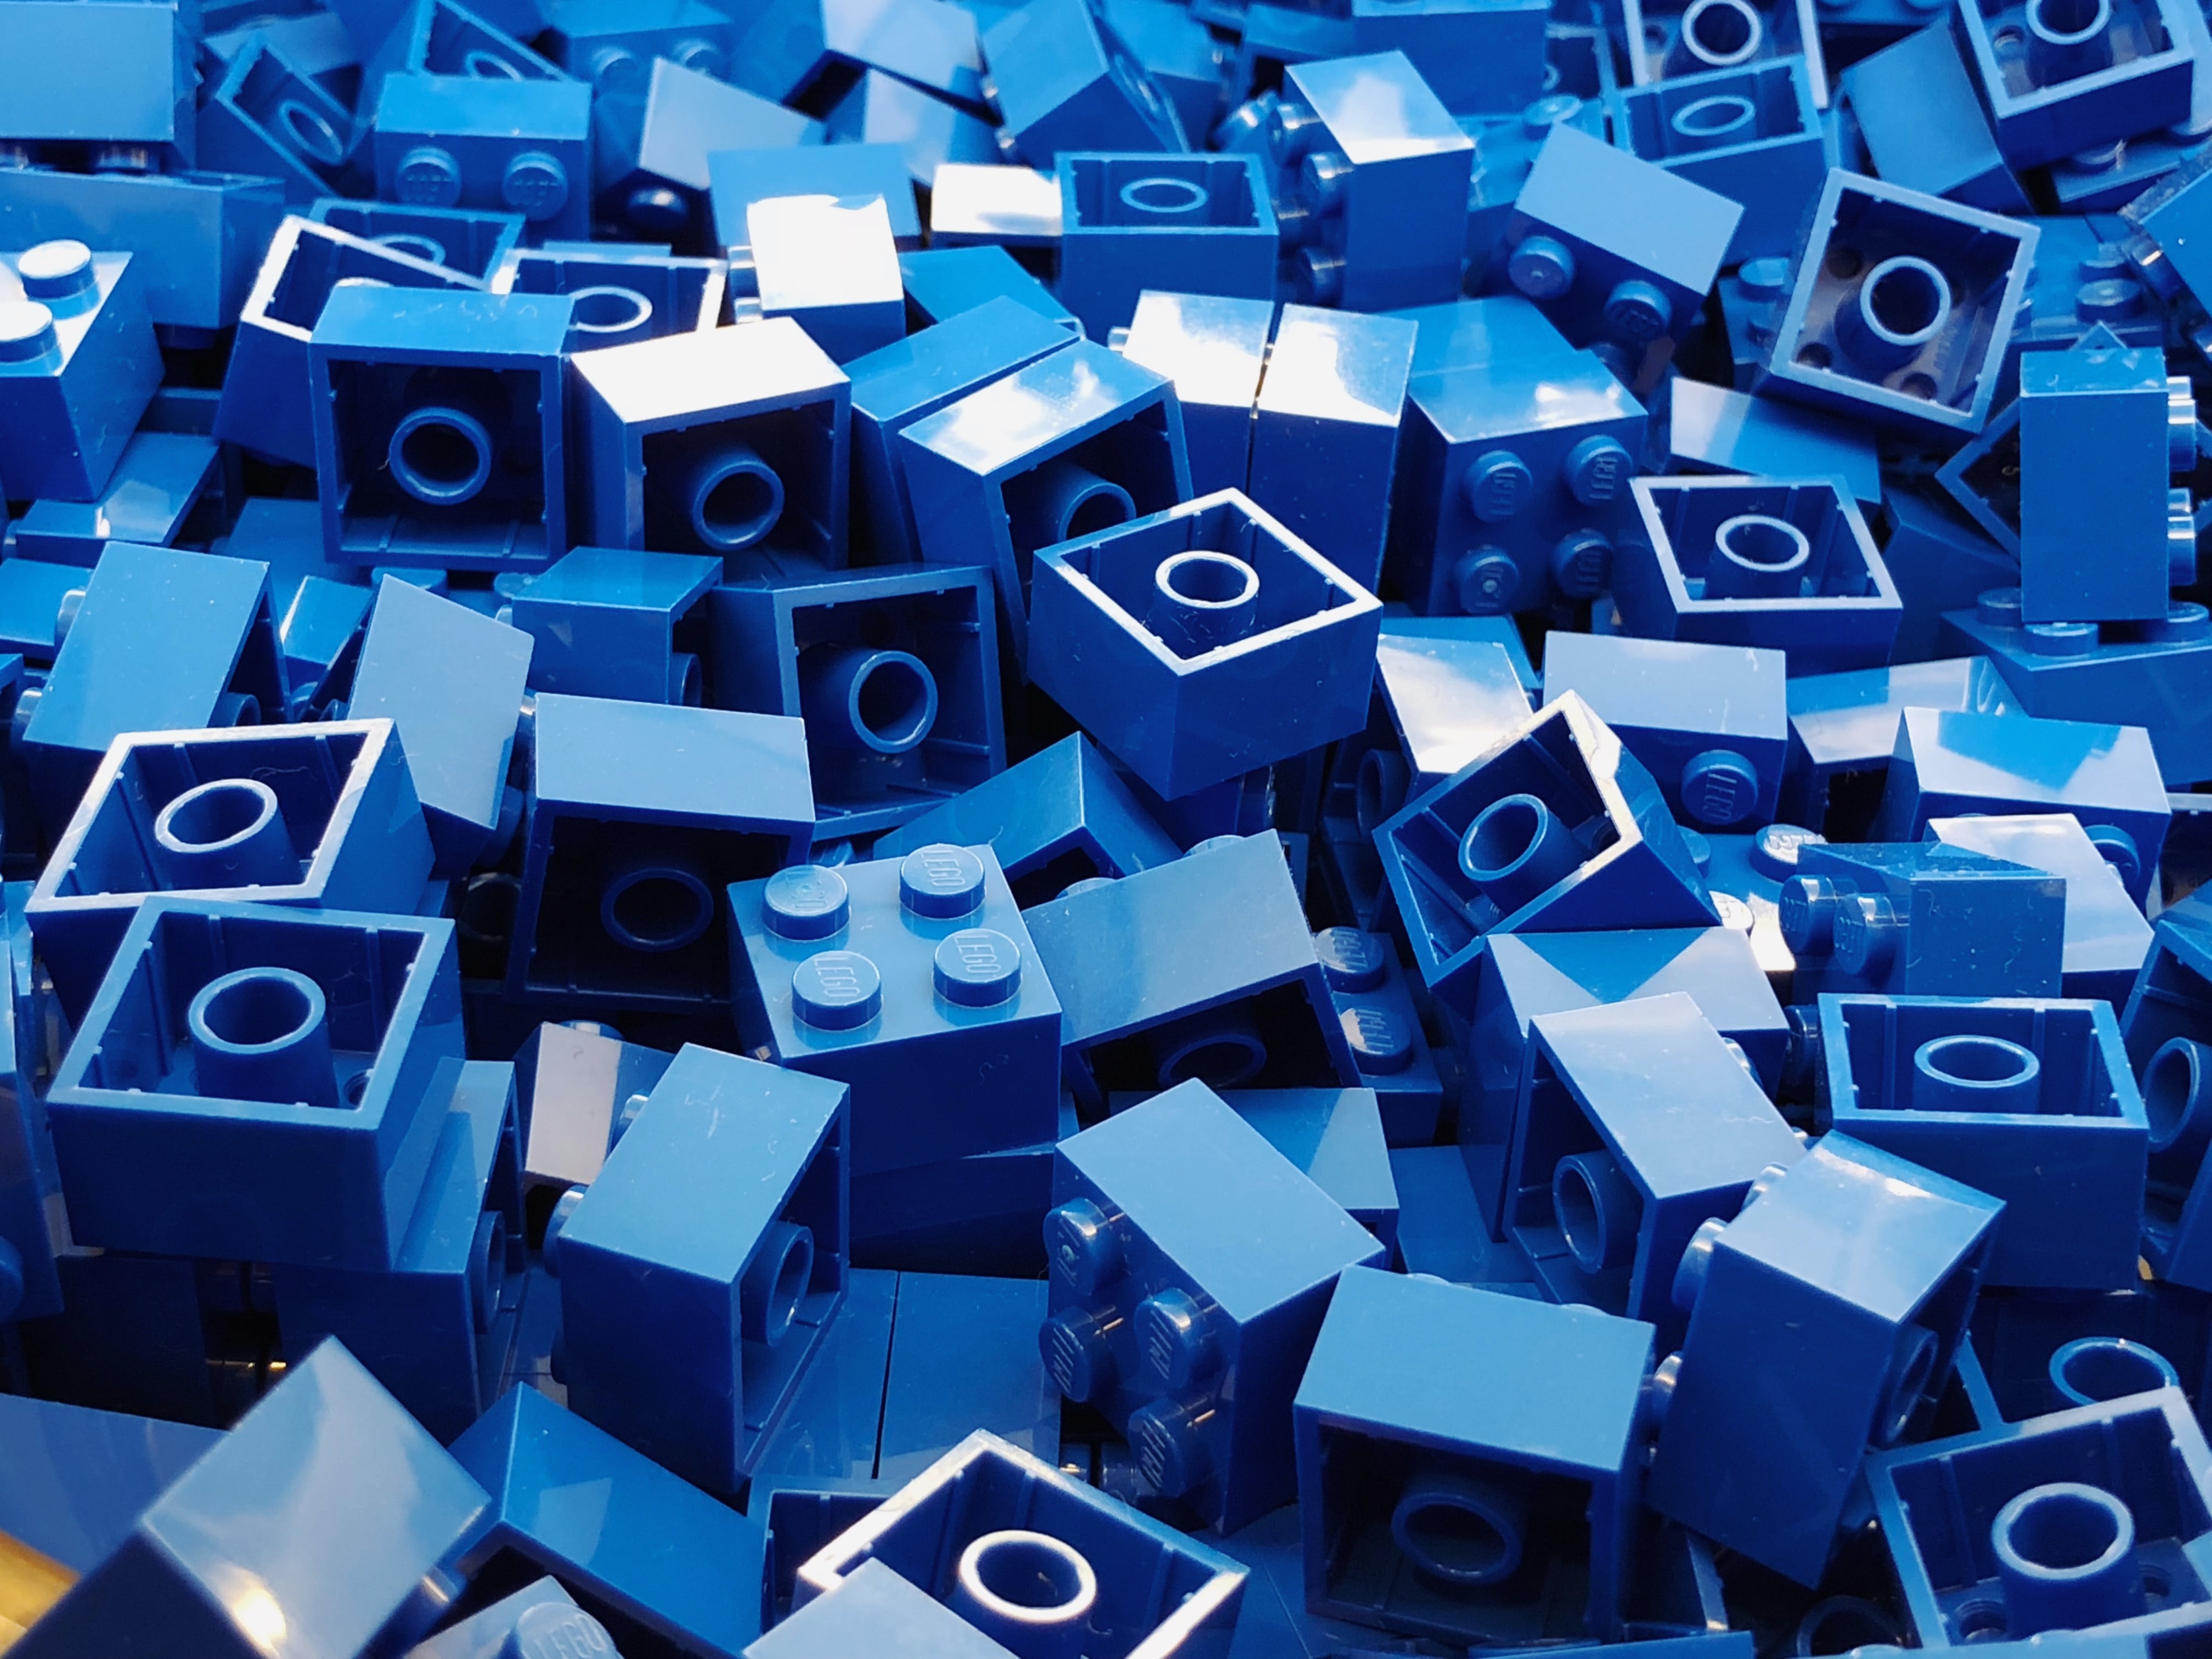 Blue lego bricks in a pile